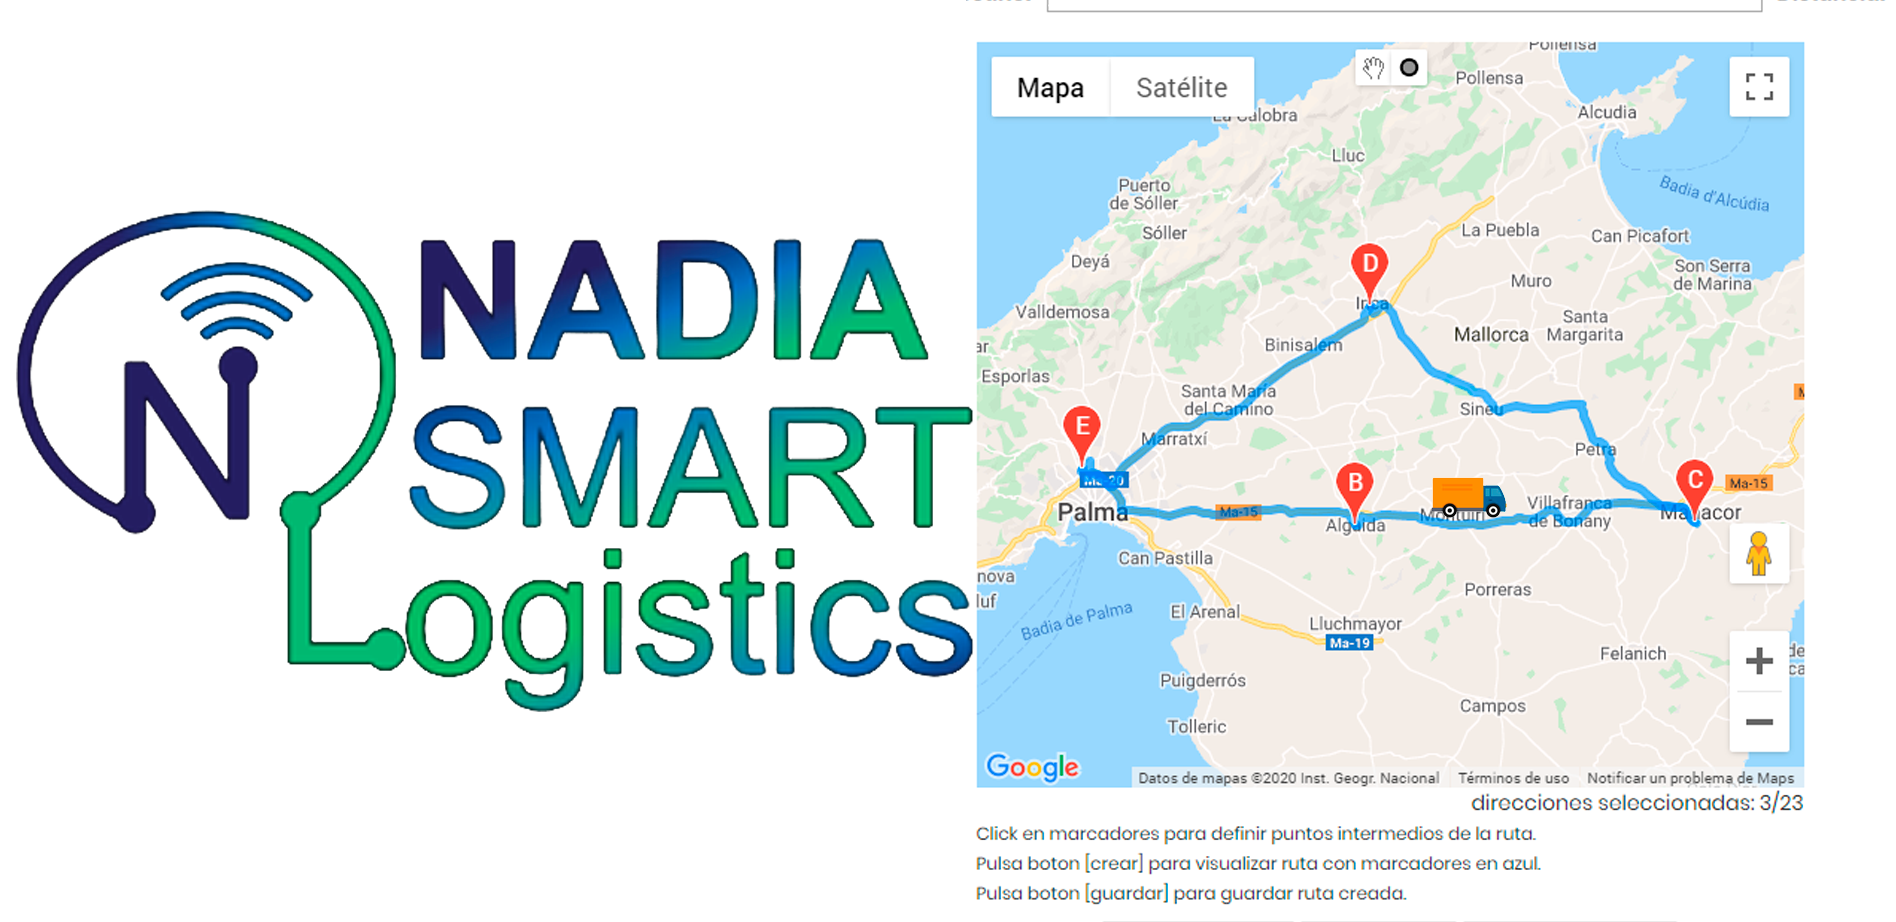 Nadia Smart Logistics